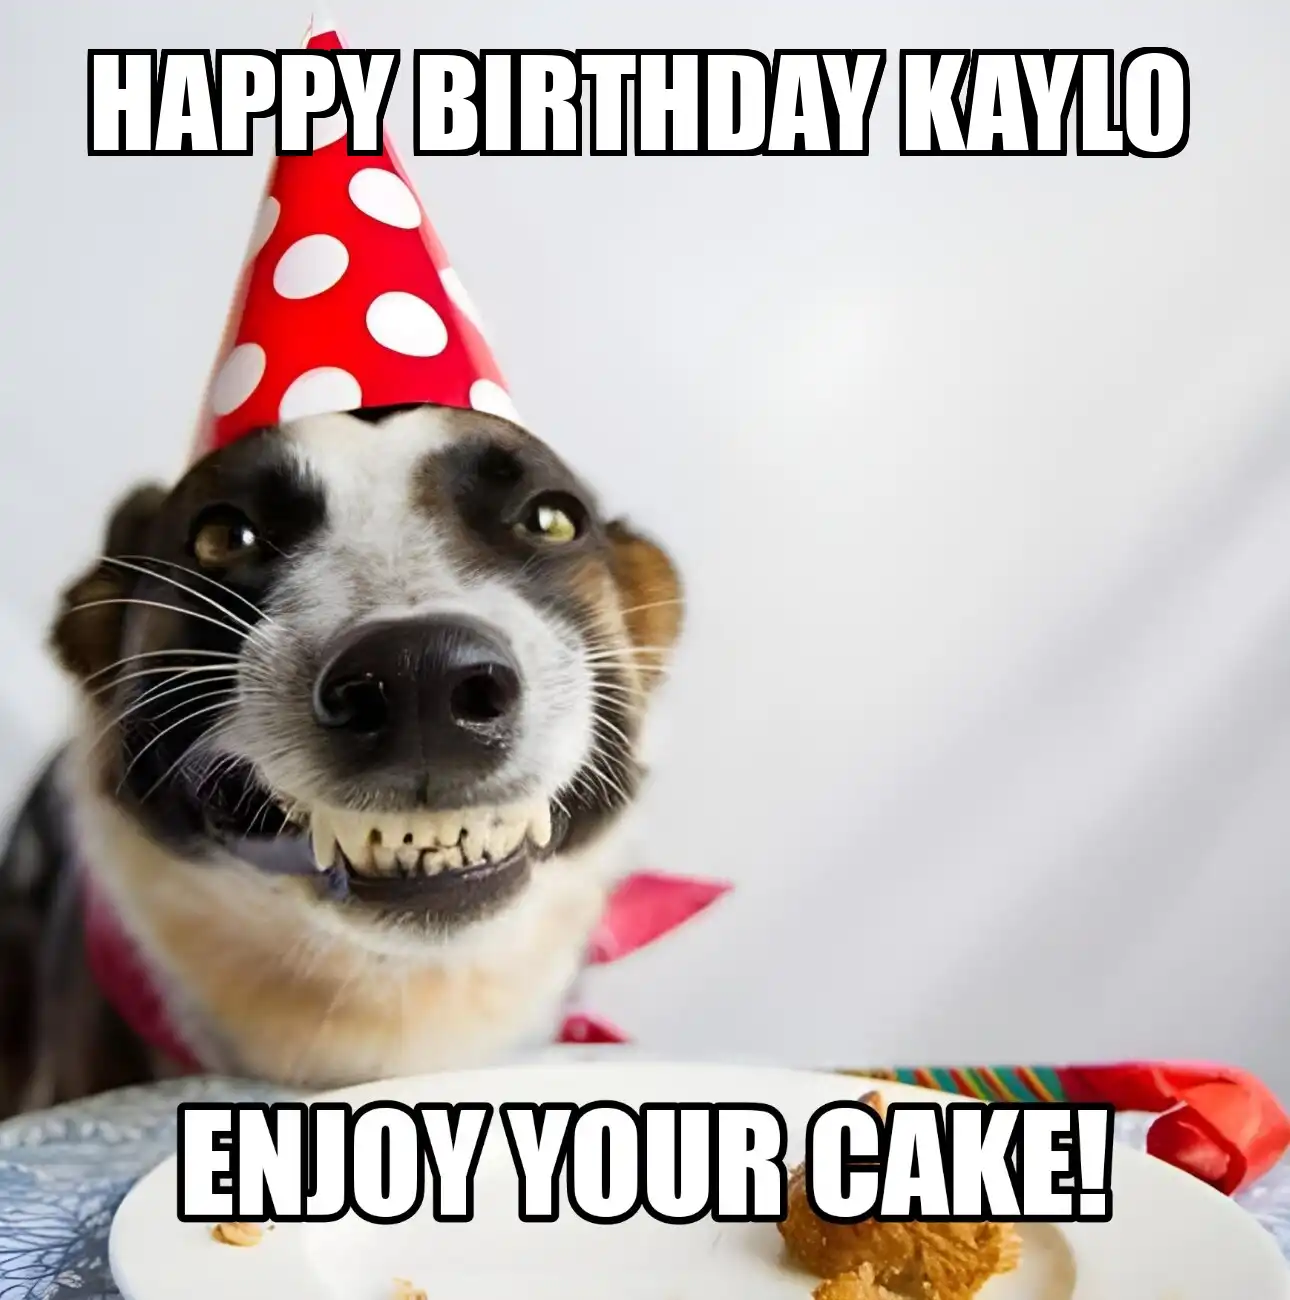 Happy Birthday Kaylo Enjoy Your Cake Dog Meme